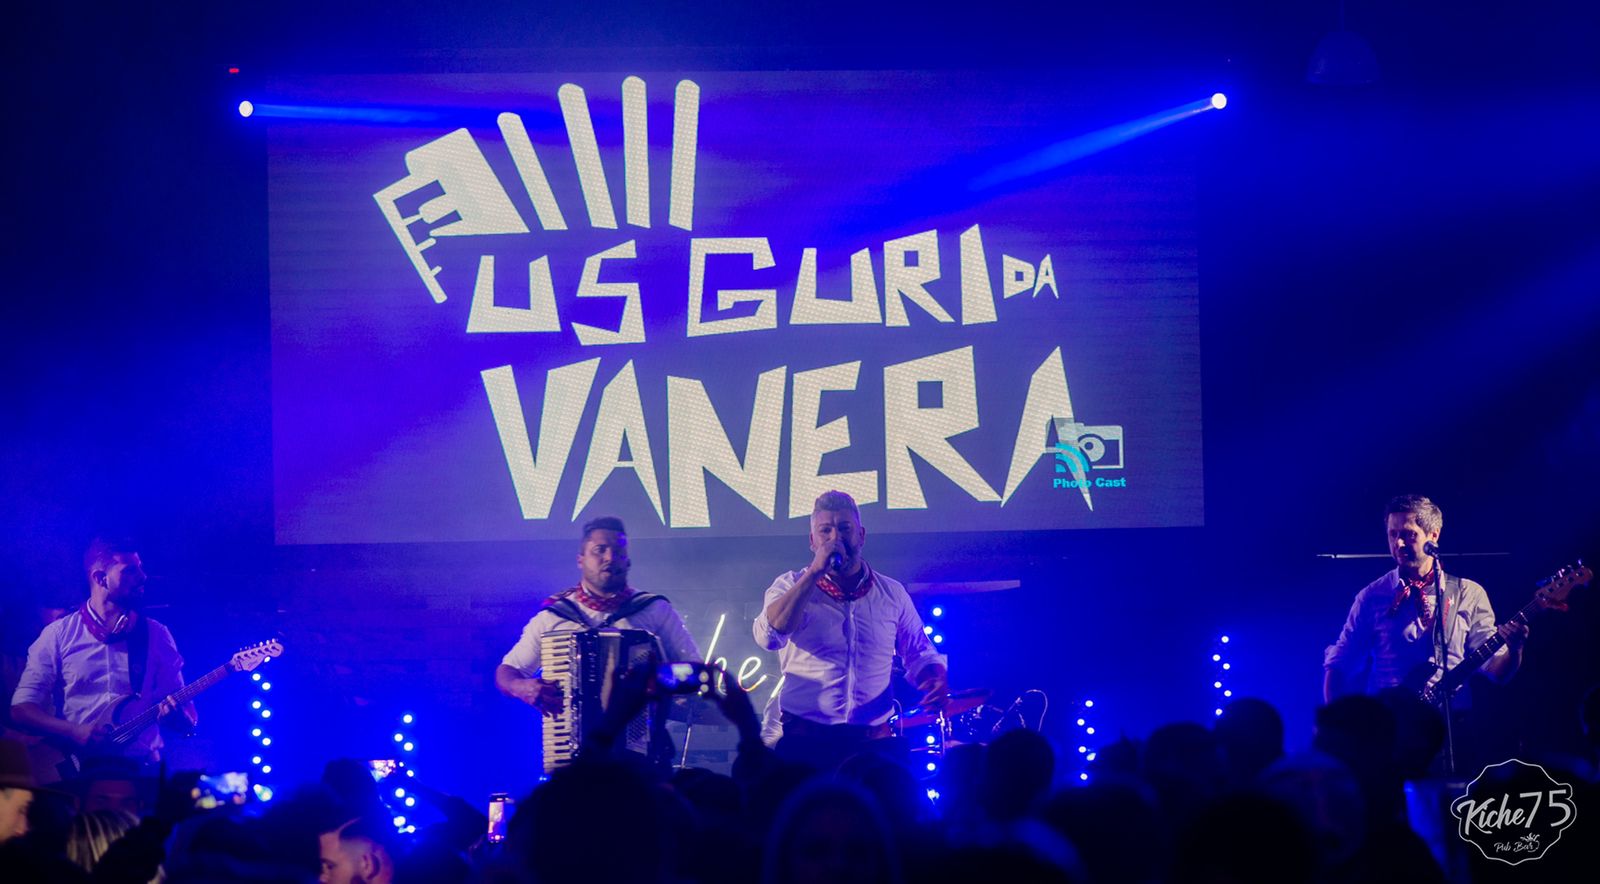 Grupo gravataiense, US GURI DA VANERA vira destaque no cenário musical